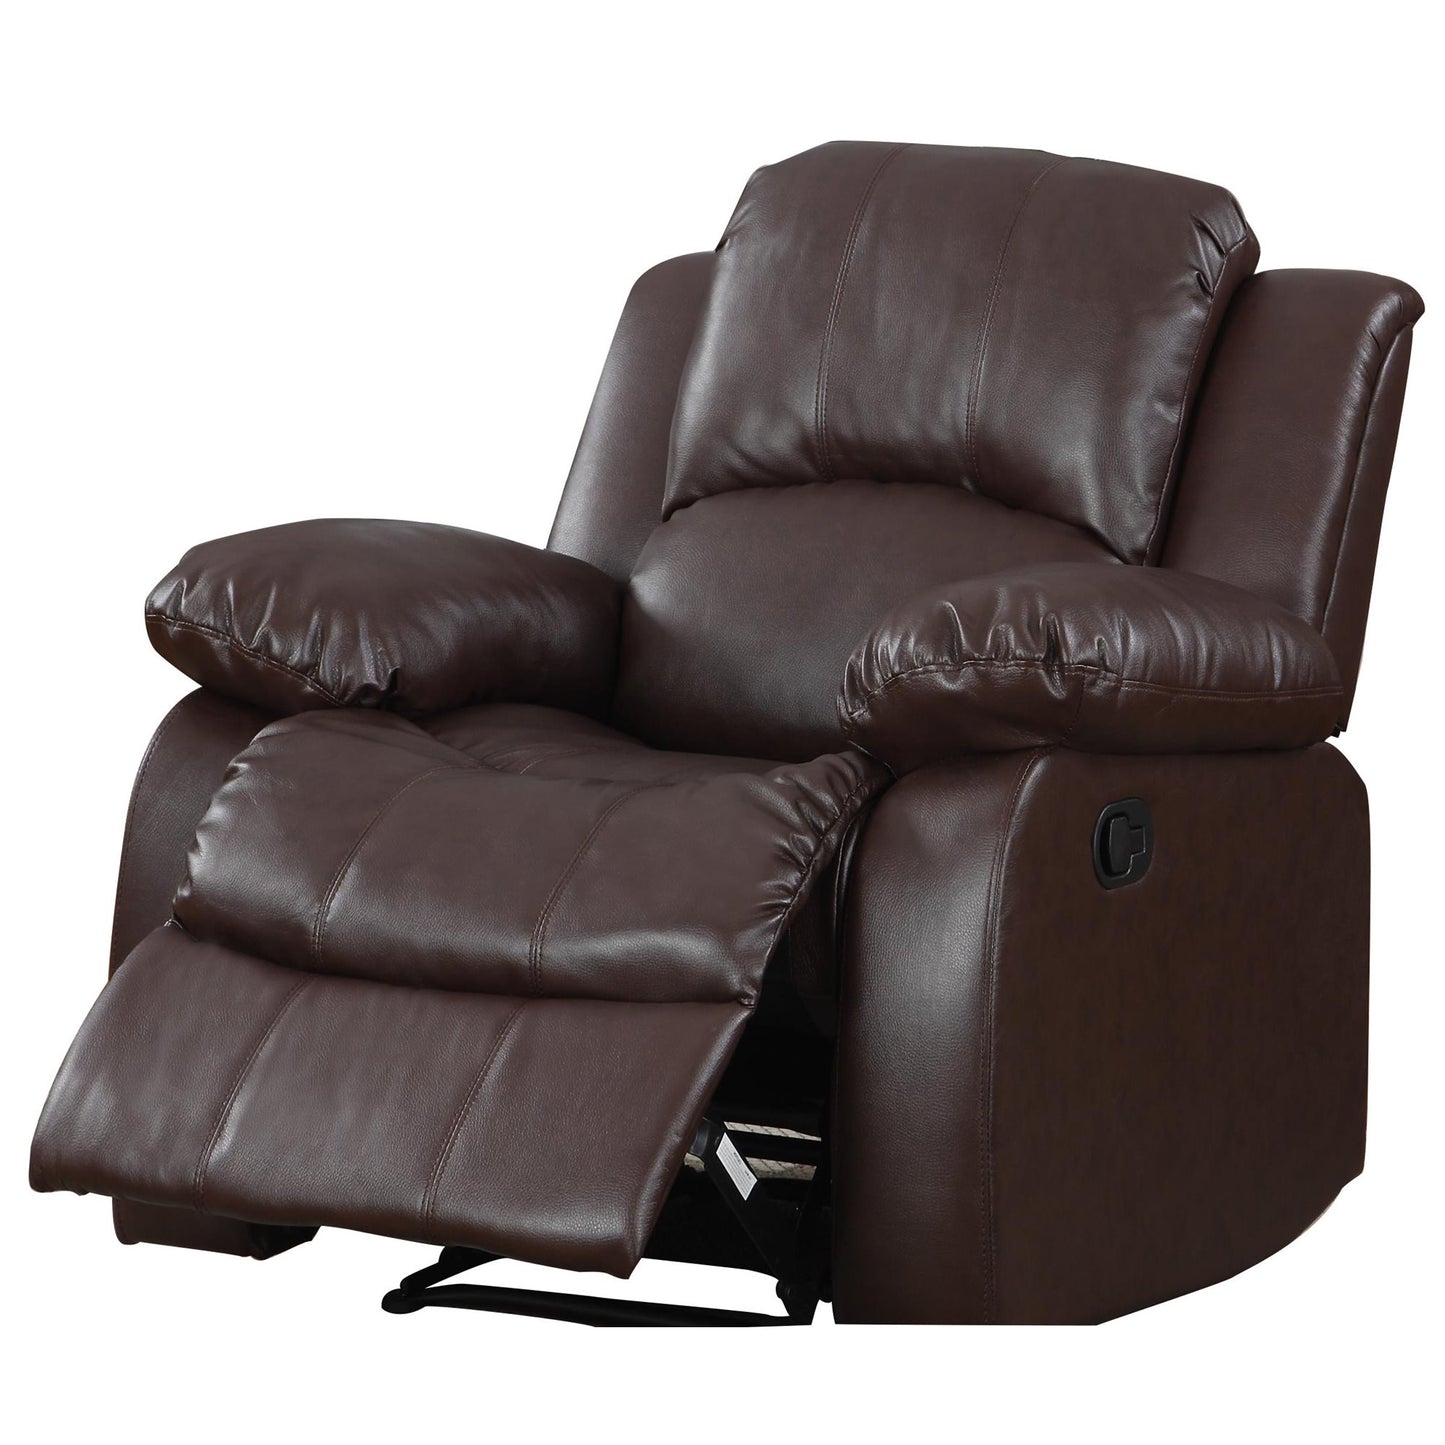 Homelegance Cranley Recliner Chair in Leather - Brown